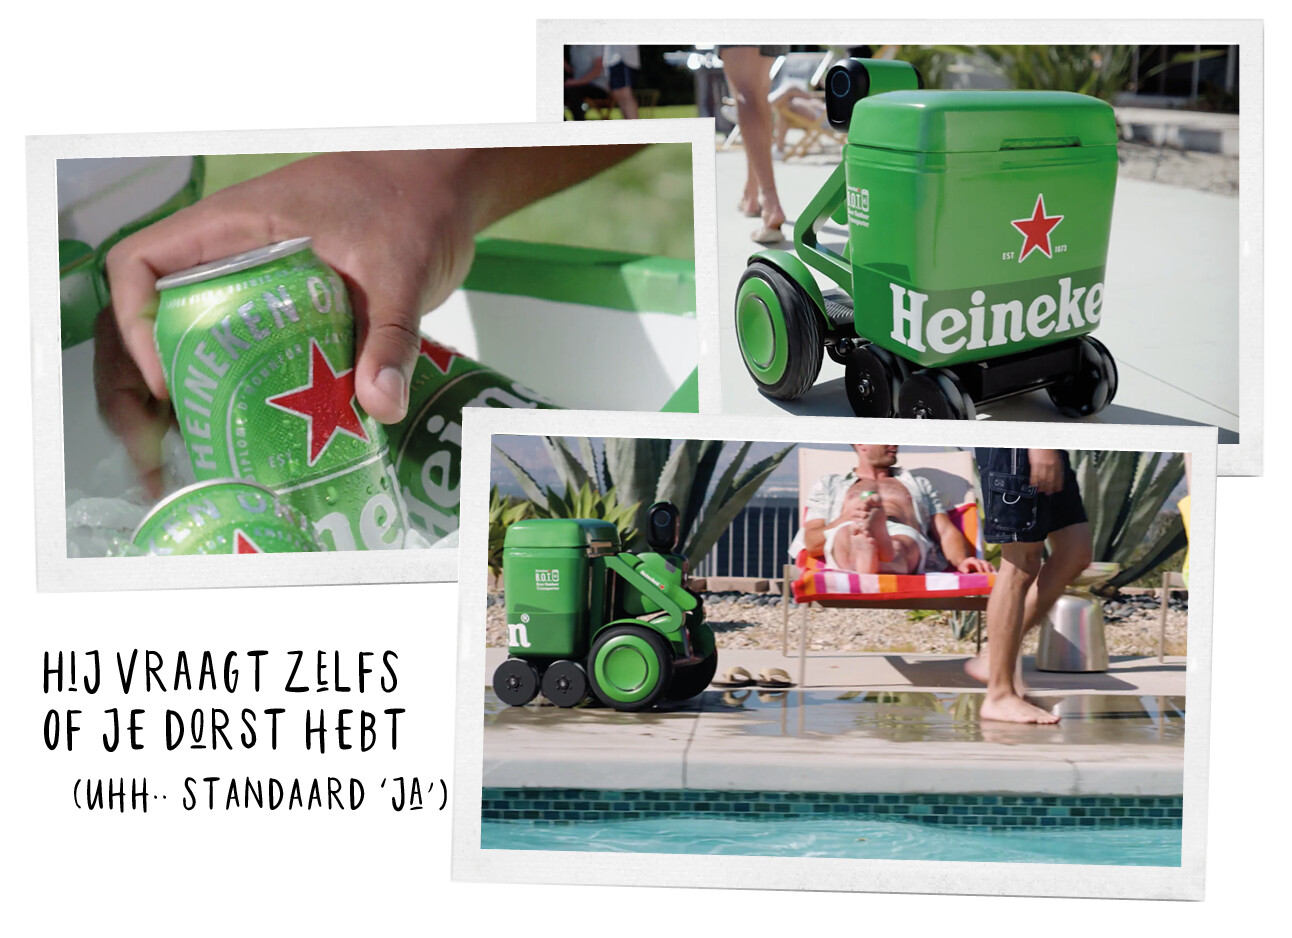 bierkoeier van Heineken B.O.T.